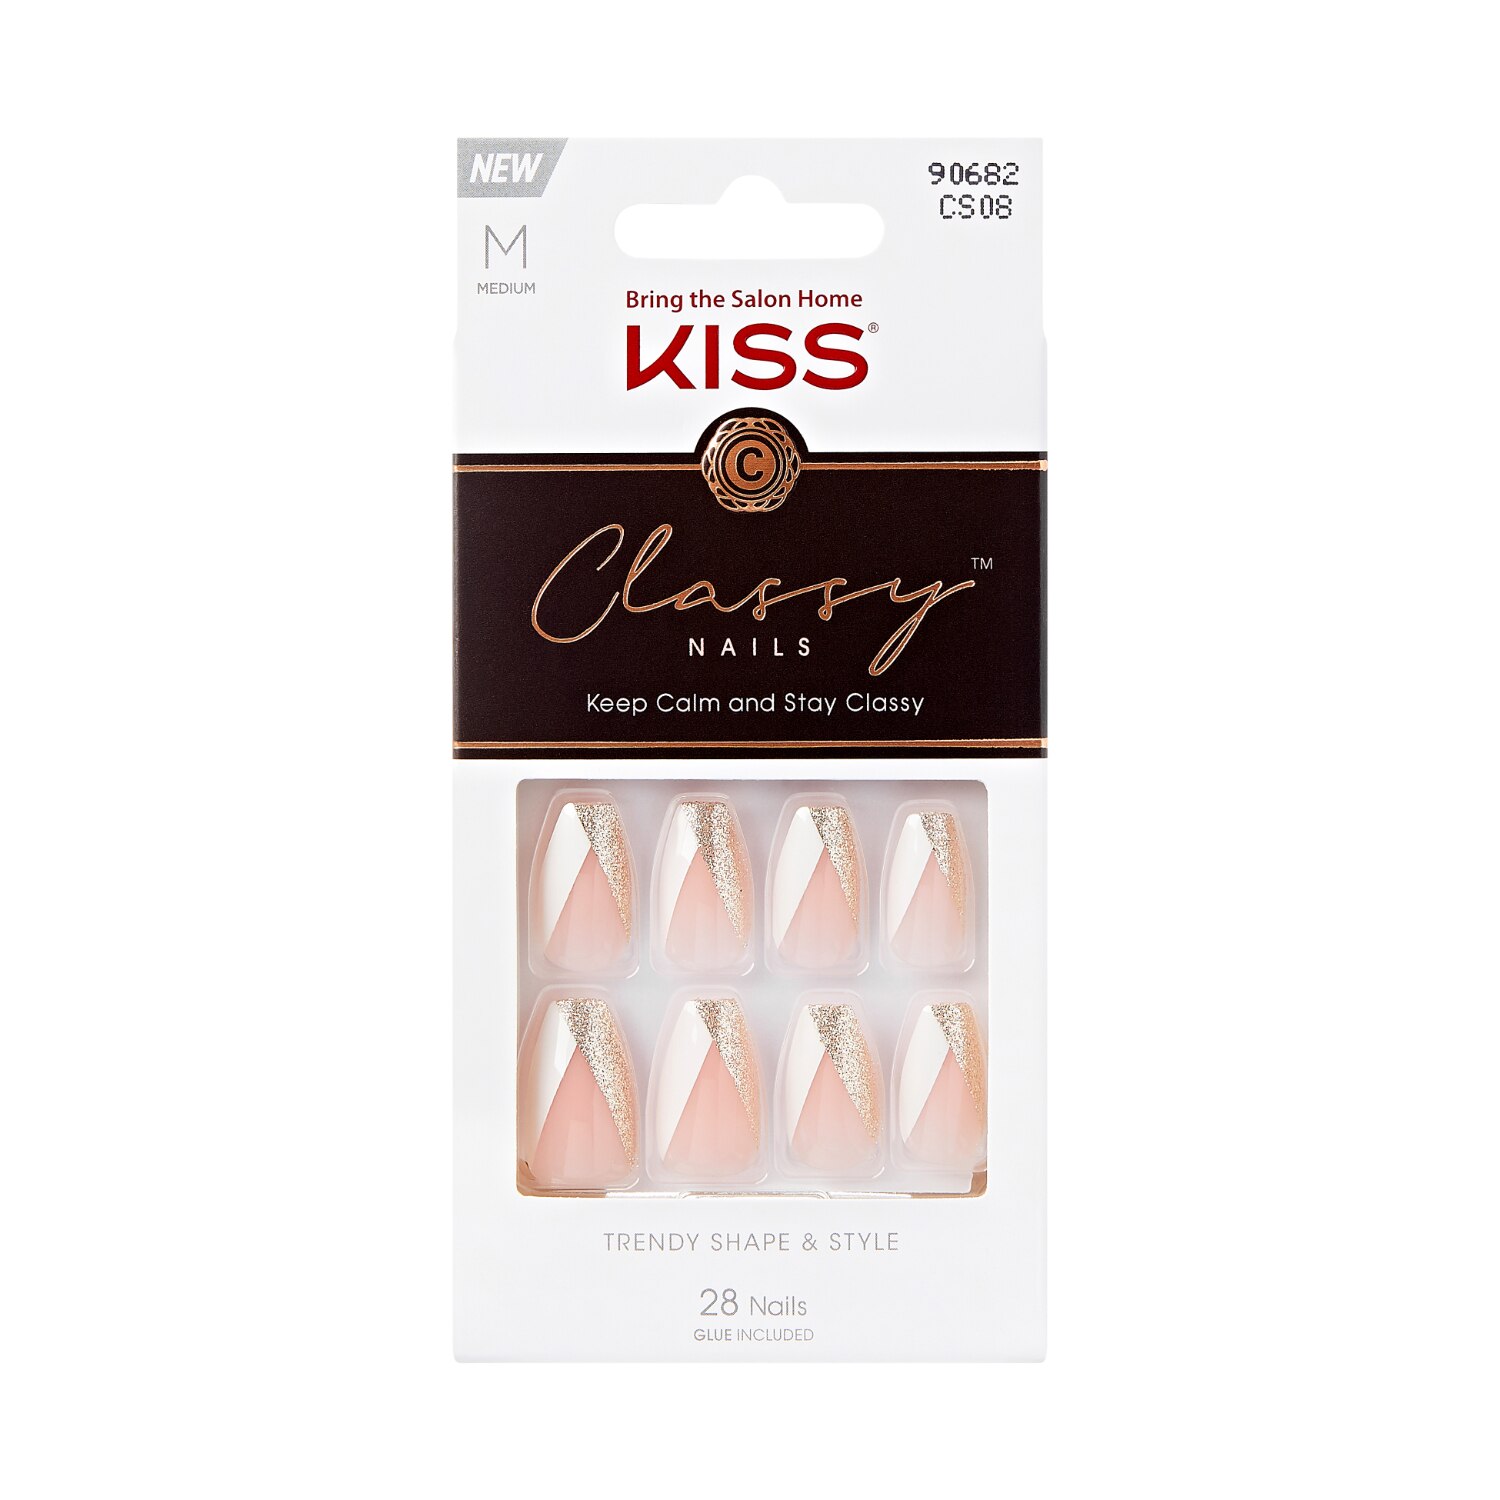 KISS Classy Press-On Nails, The BOSS, Glittery French, Medium Coffin, 31 Ct. , CVS